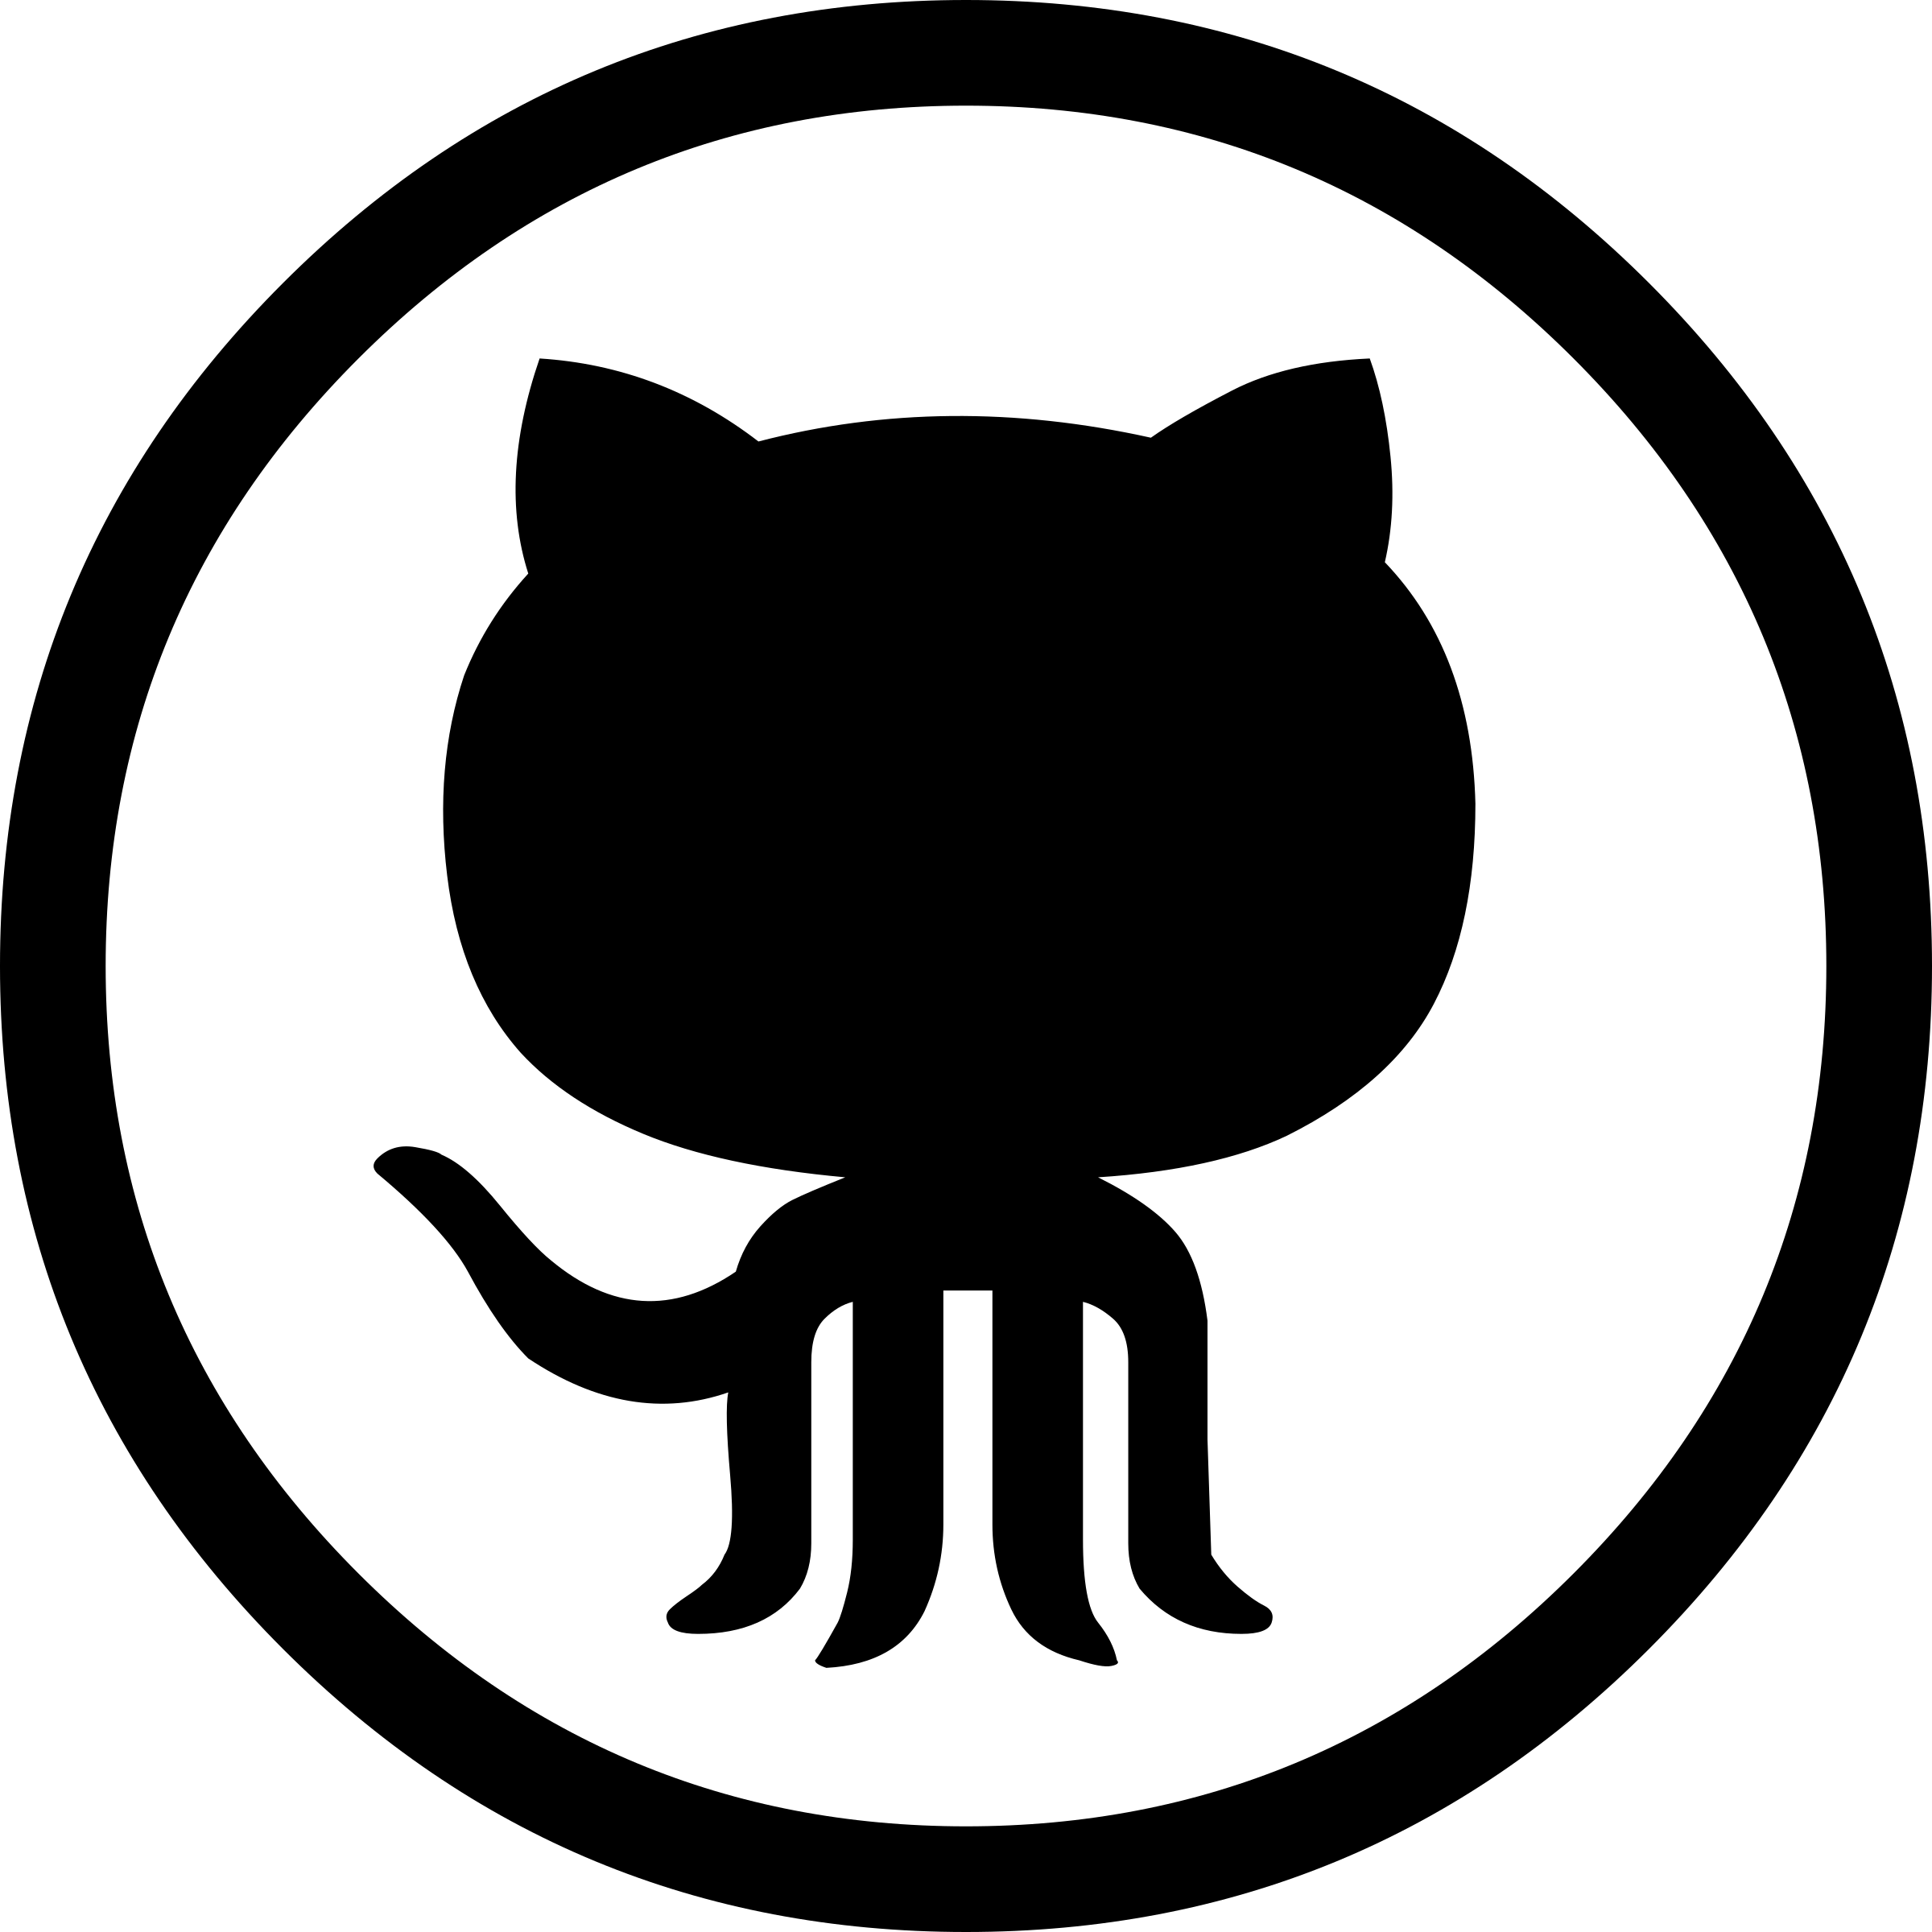 Black Github Logo PNG Transparent Image